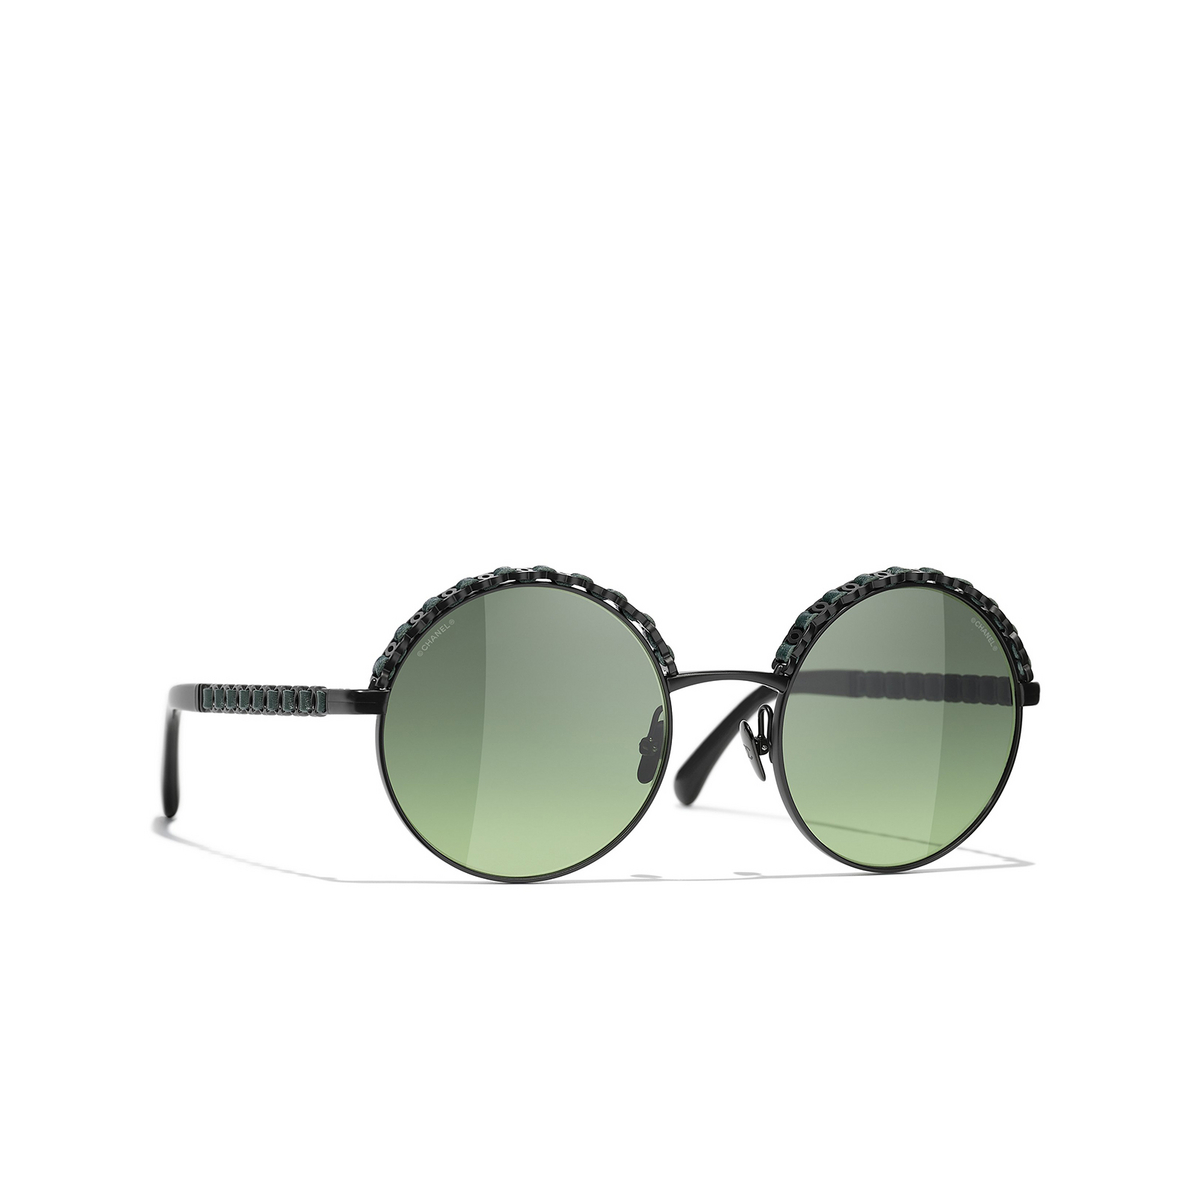 CHANEL round Sunglasses C1012A Black & Green - three-quarters view